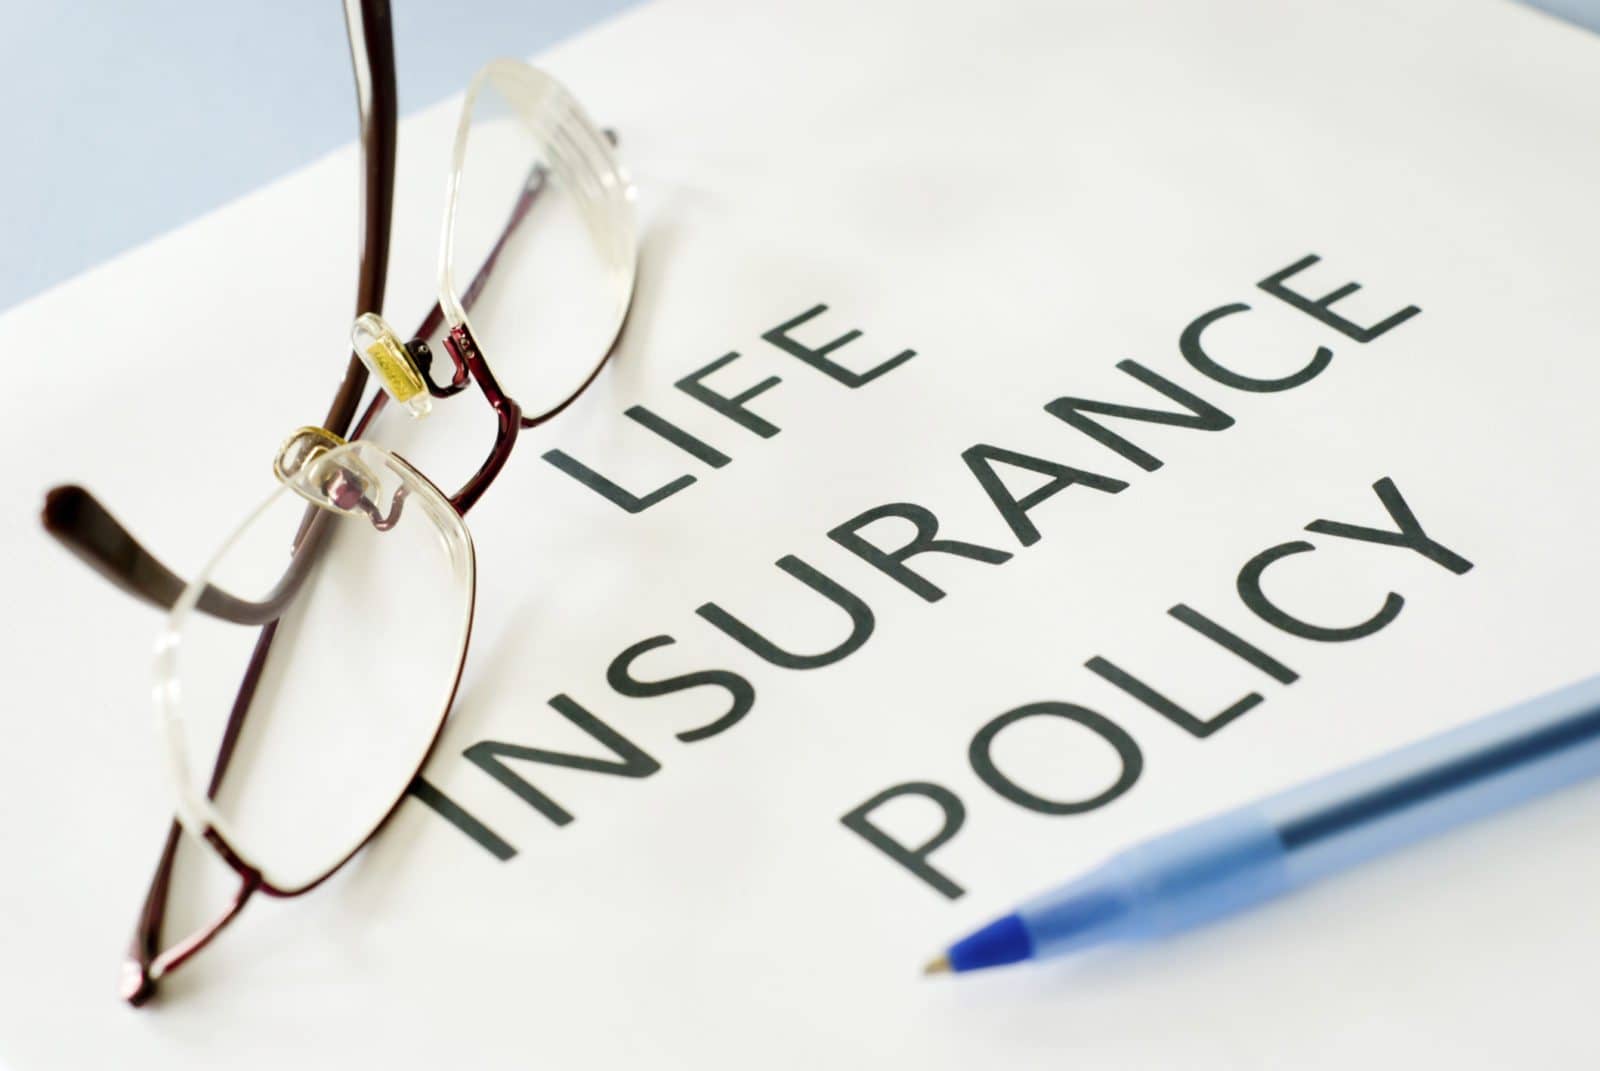 Top three reasons people buy life insurance policies.